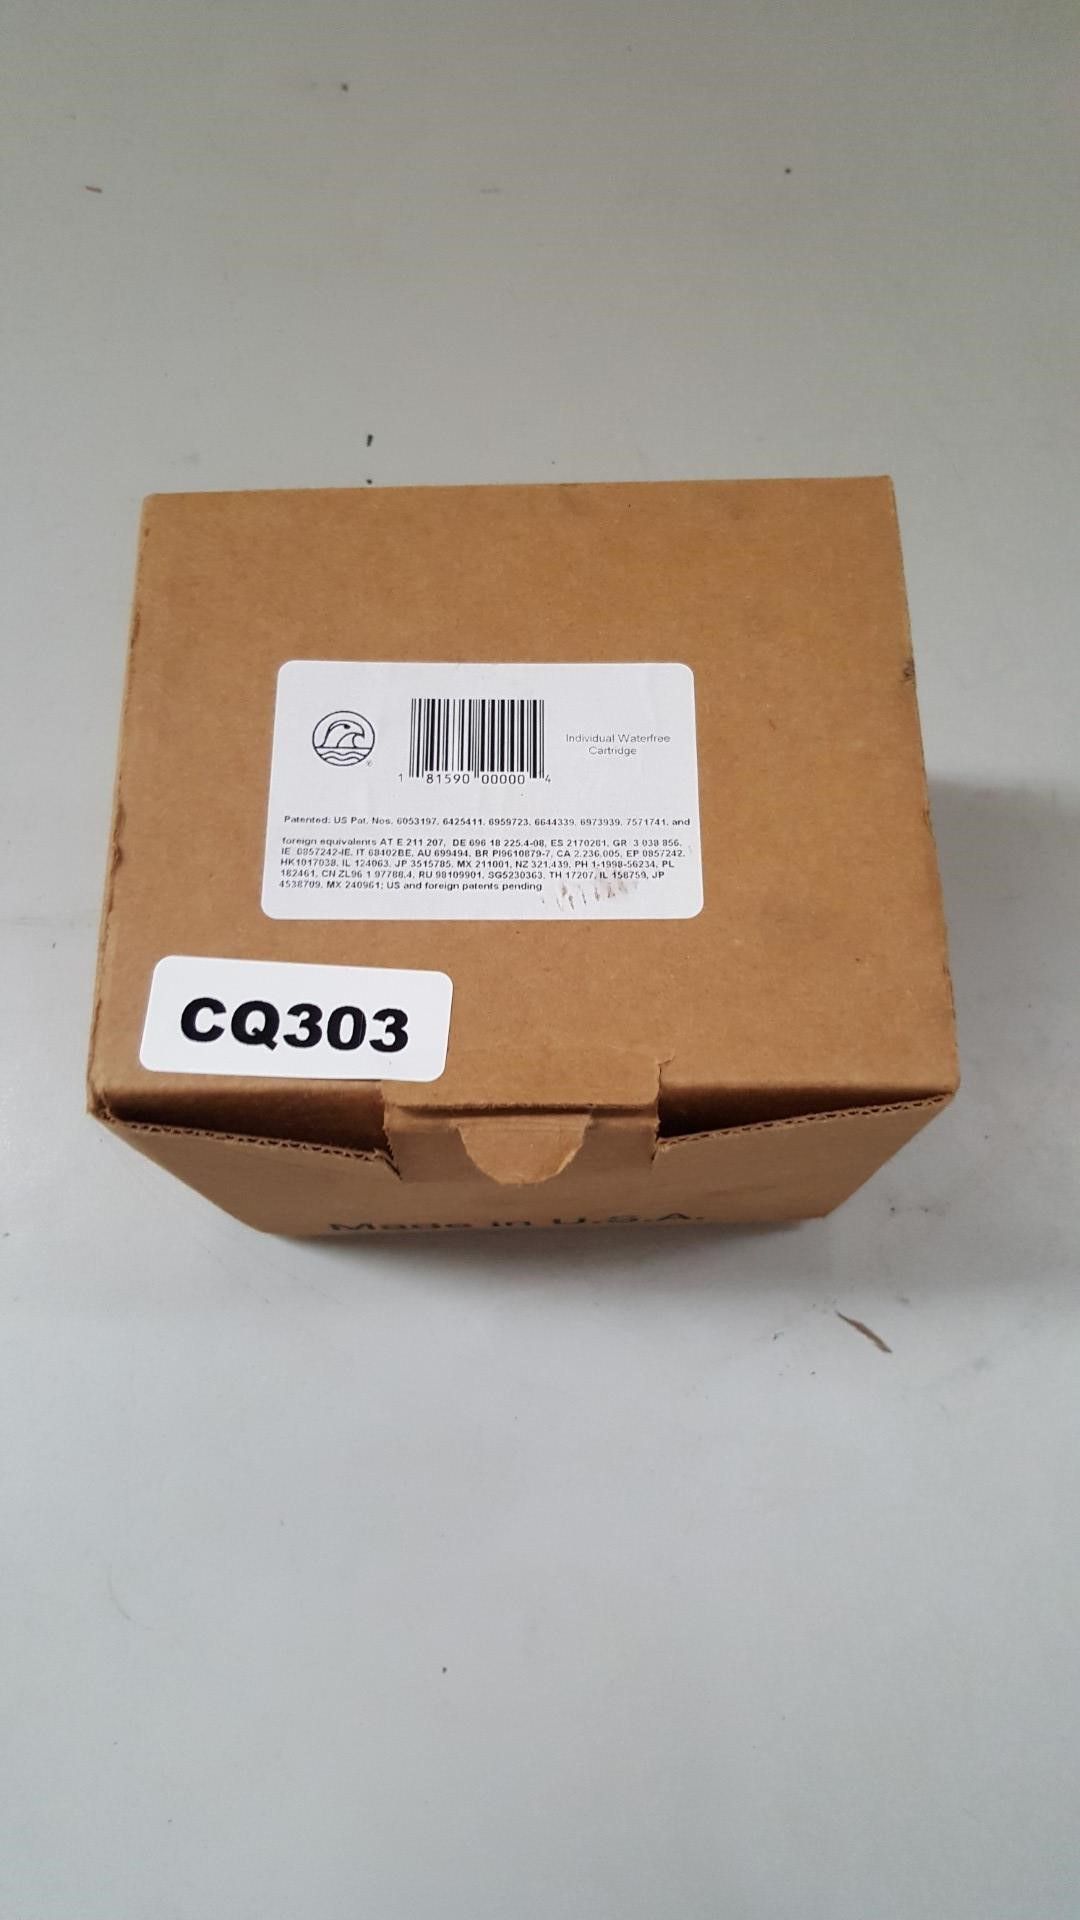 1 x Falcon Cartridge Urinal Filter Change - Ref CQ303 - Image 3 of 3